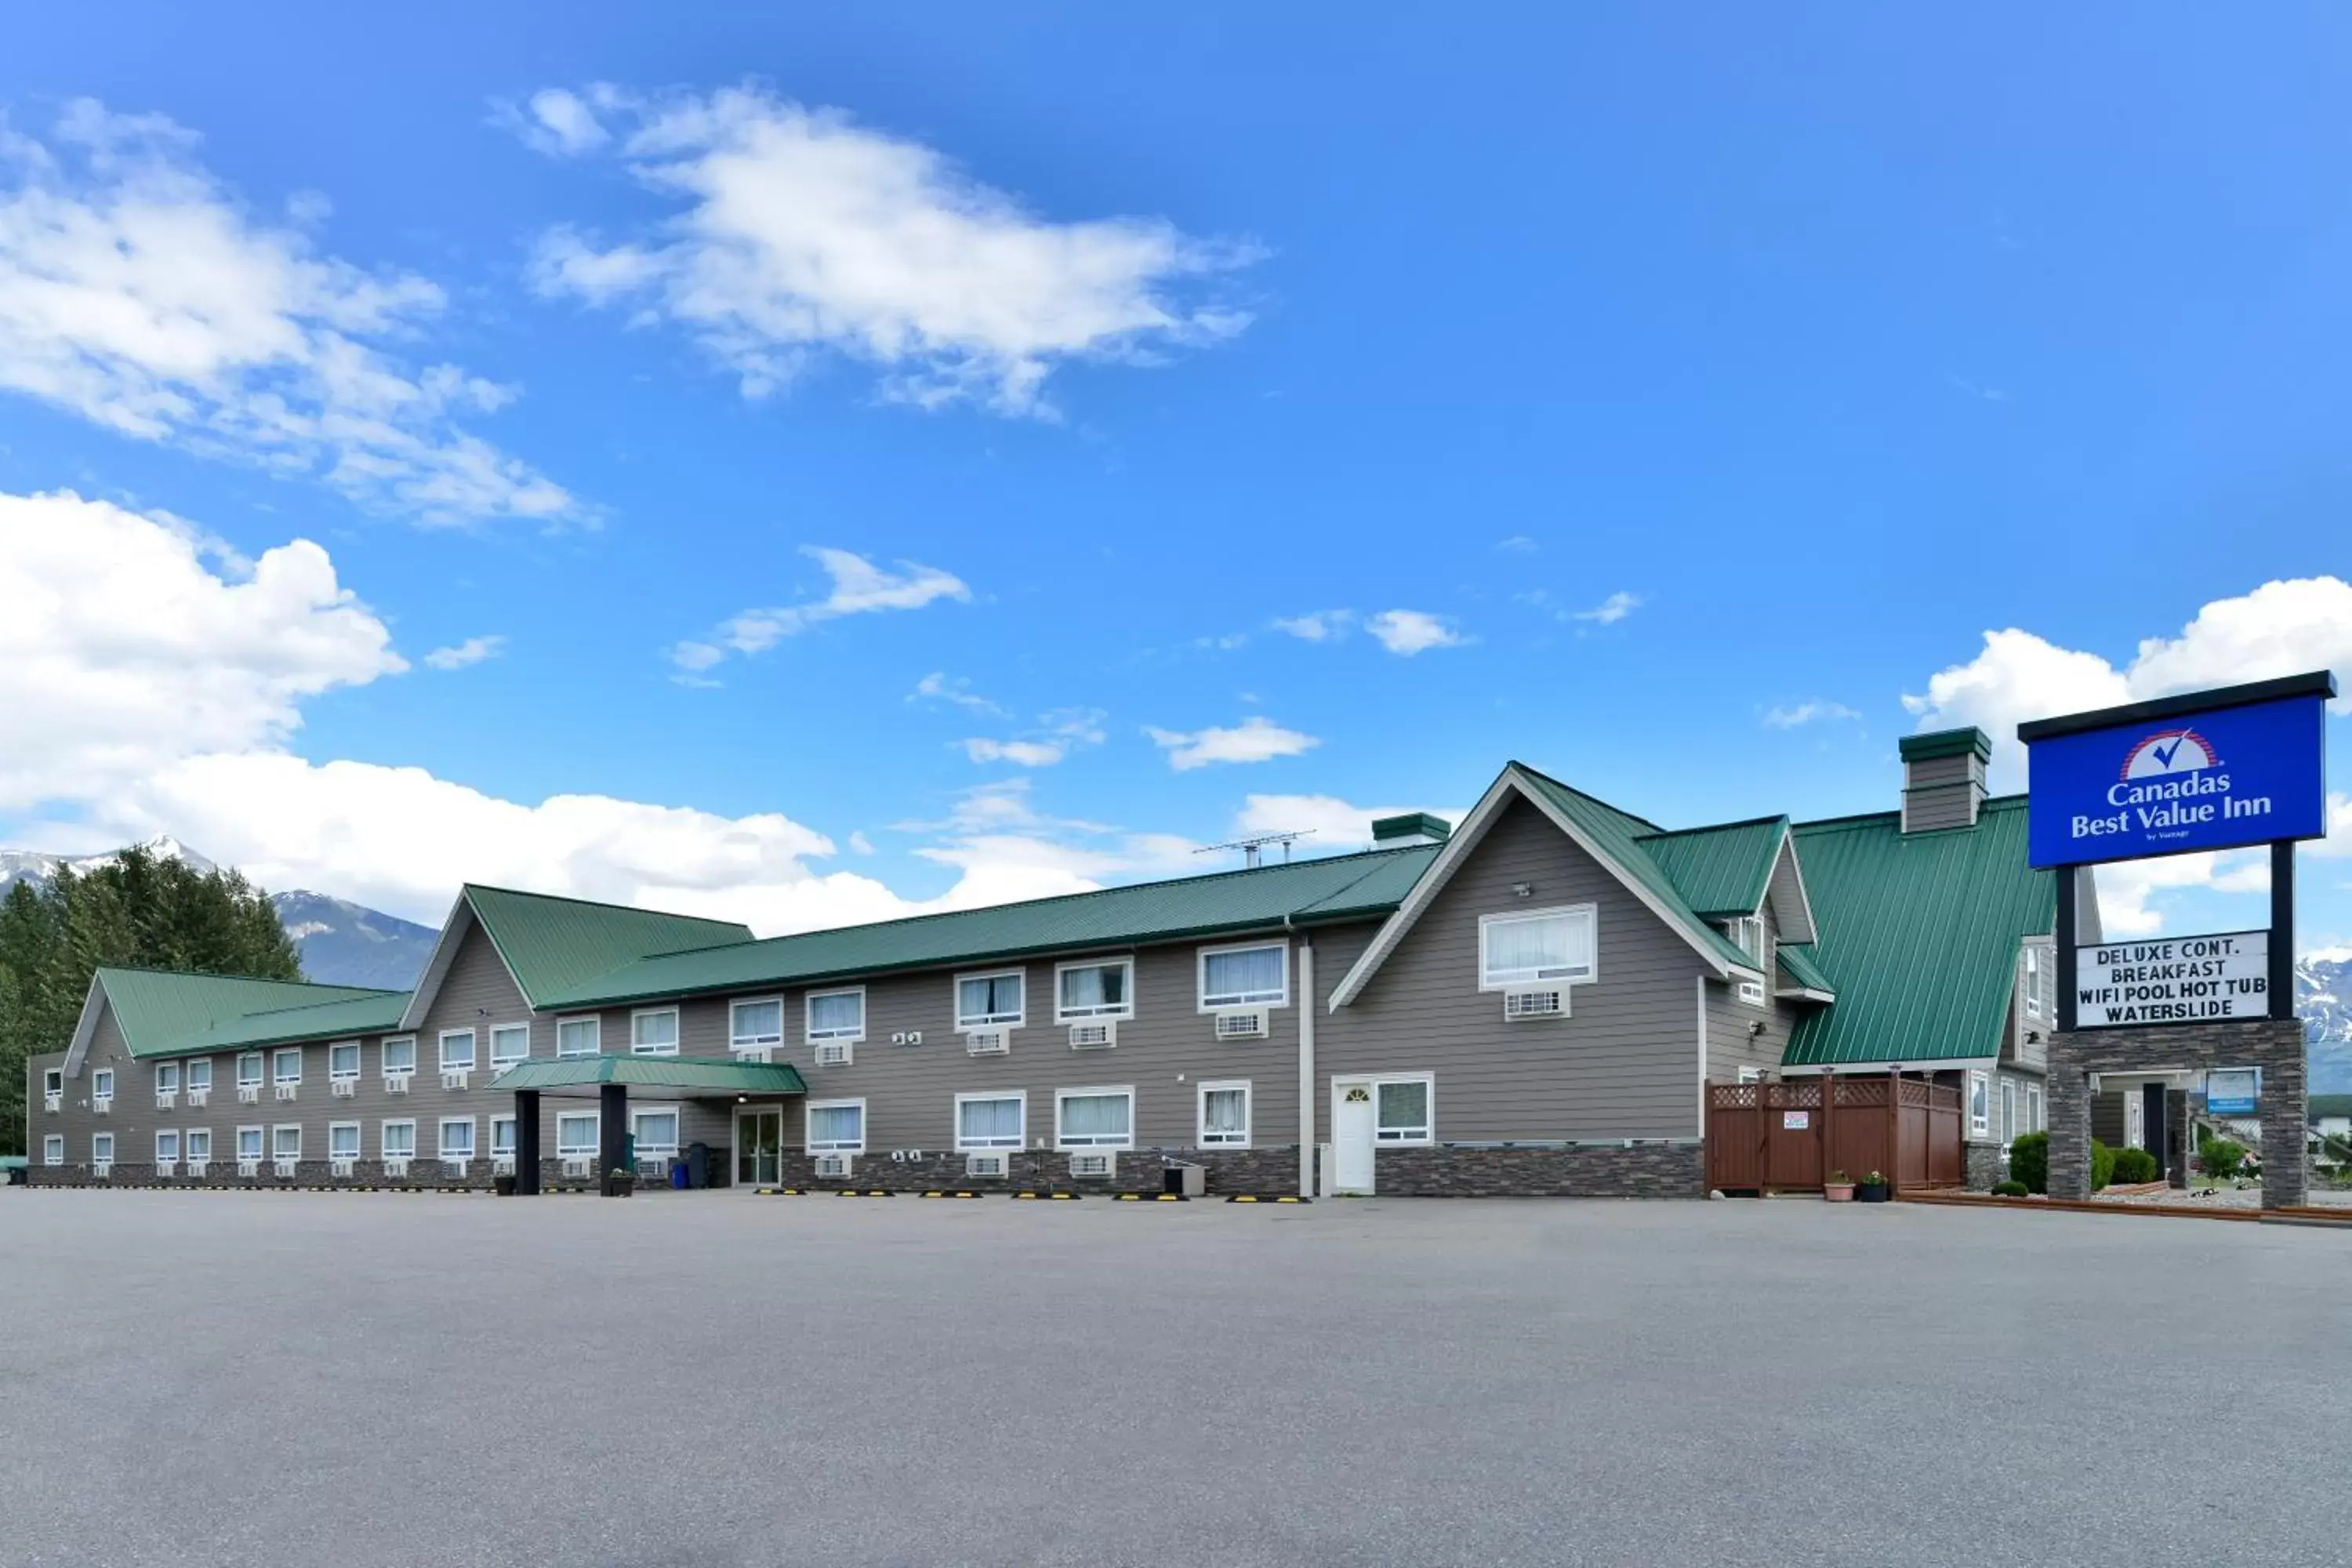 On site, Property Building in Canadas Best Value Inn Valemount